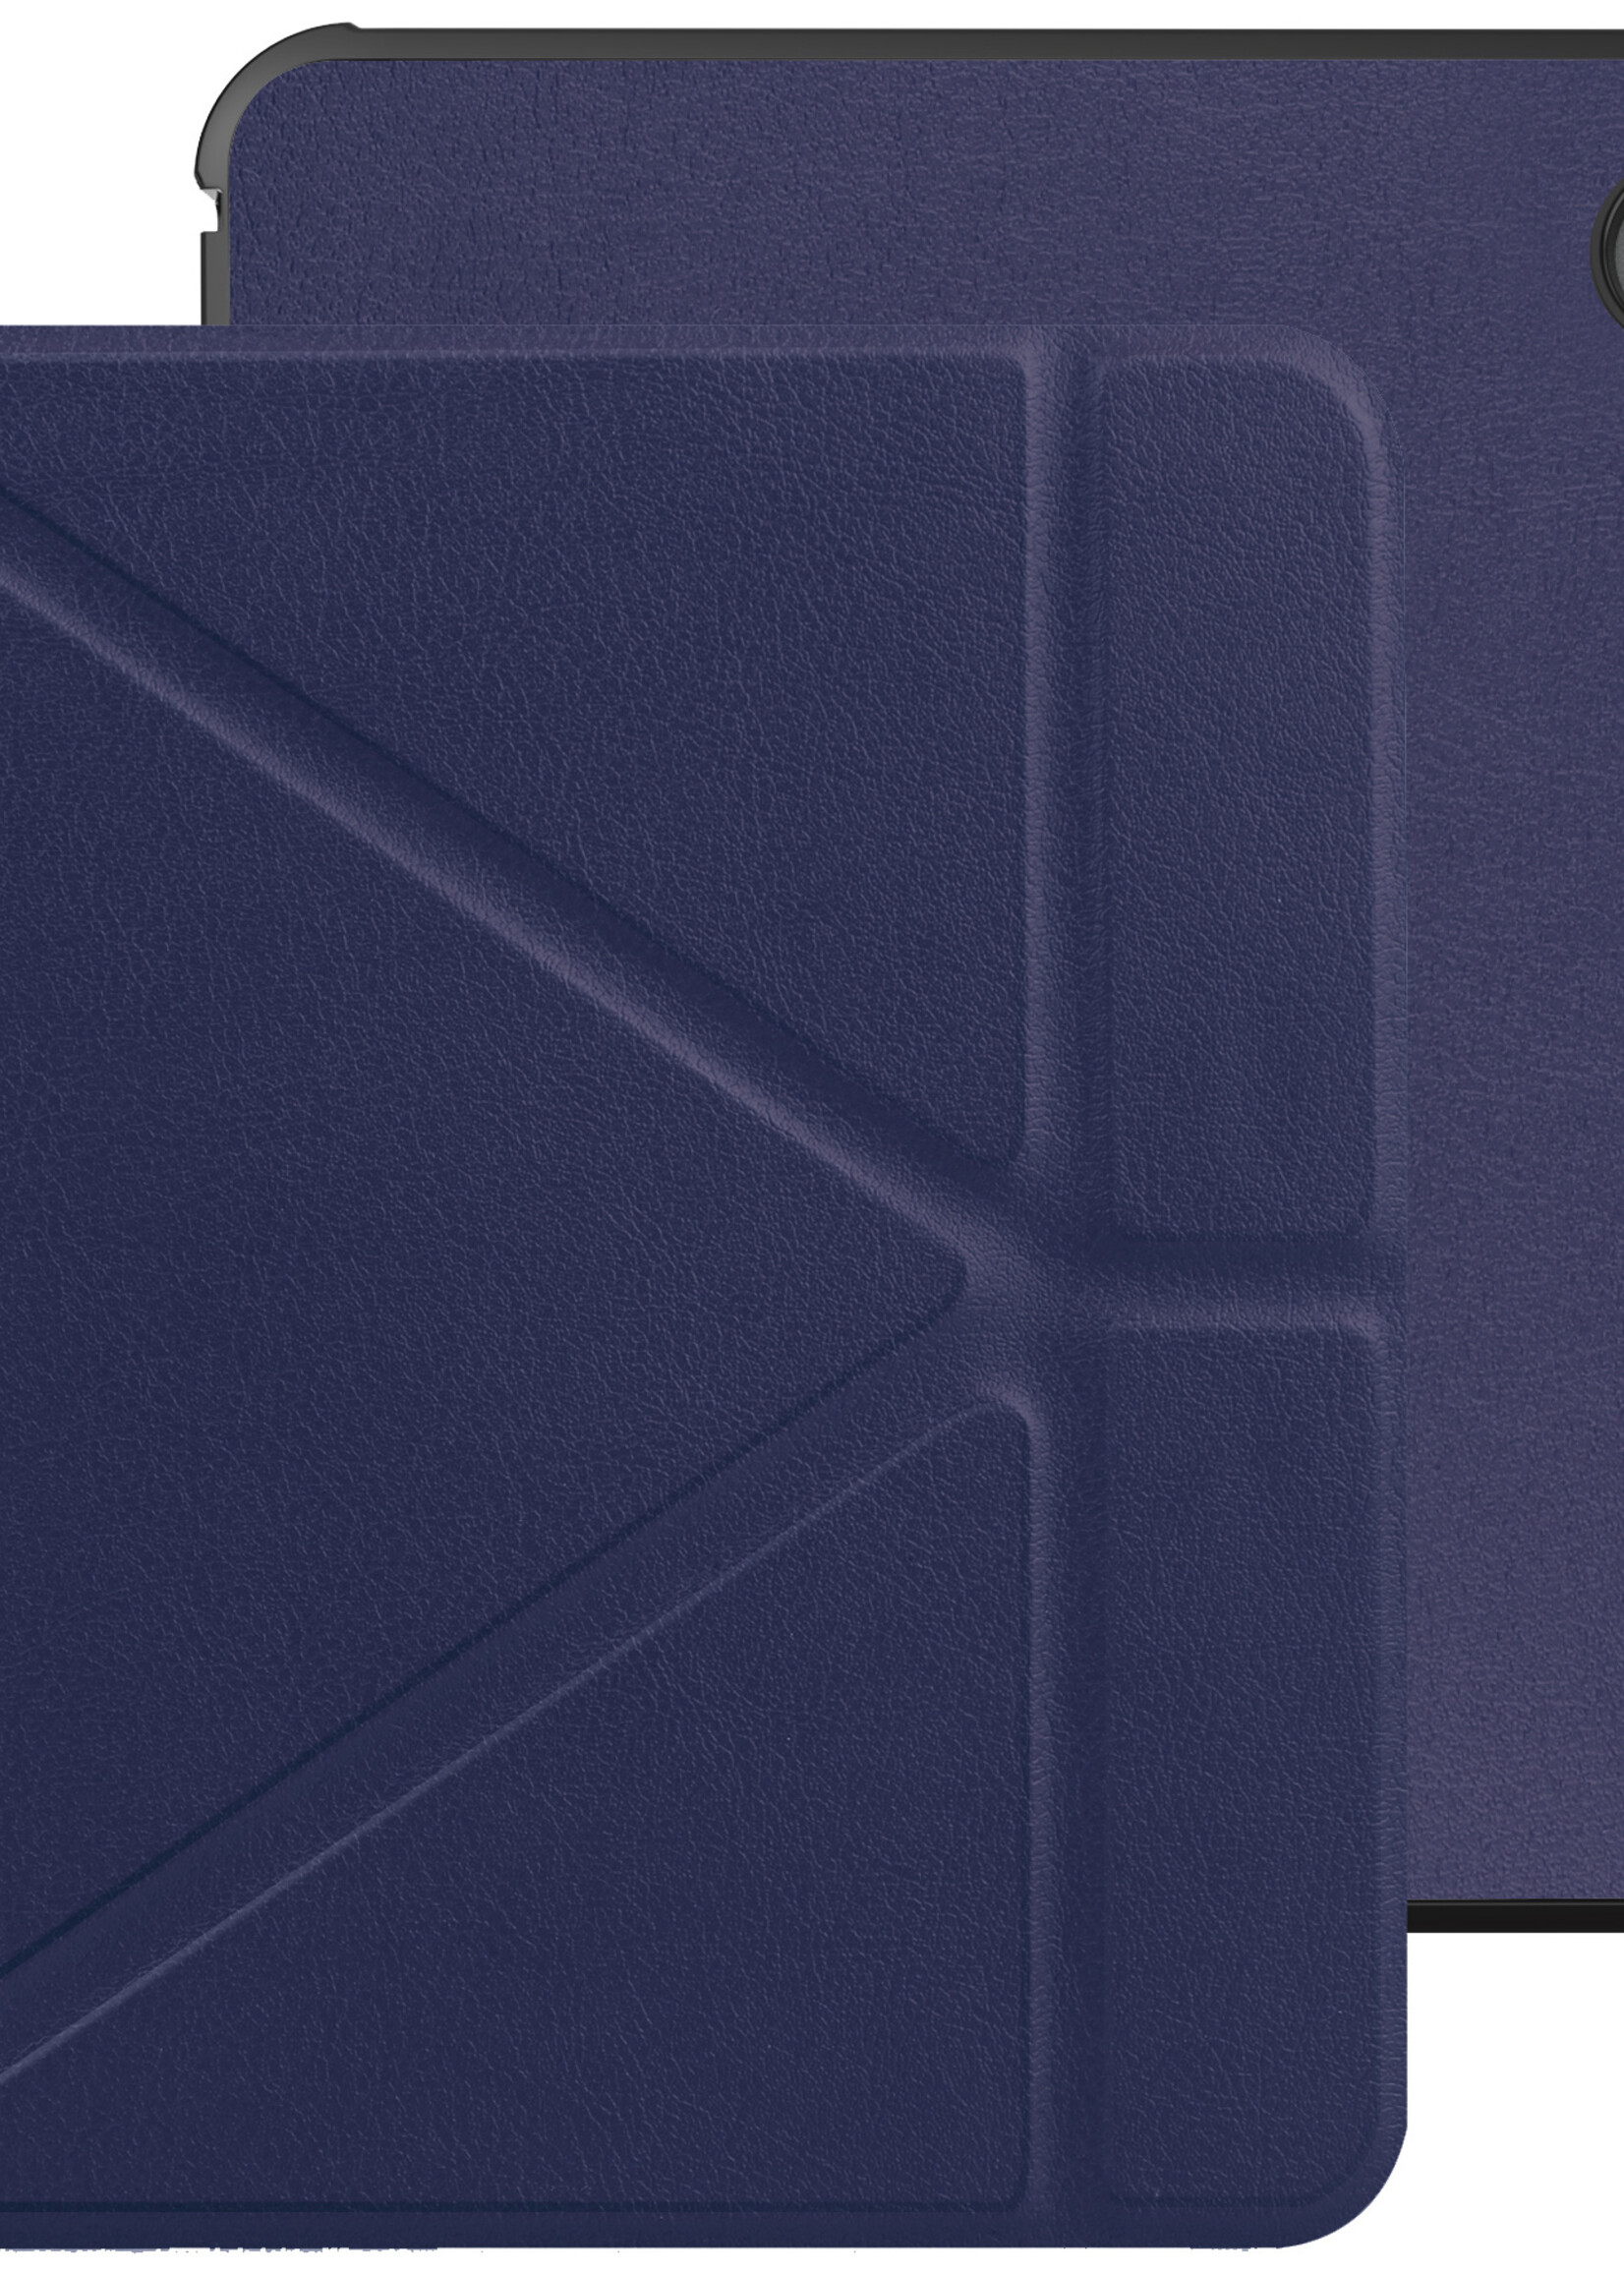 BTH Kobo Libra 2 Hoesje Case Sleep Cover Premium Hoes - Donkerblauw